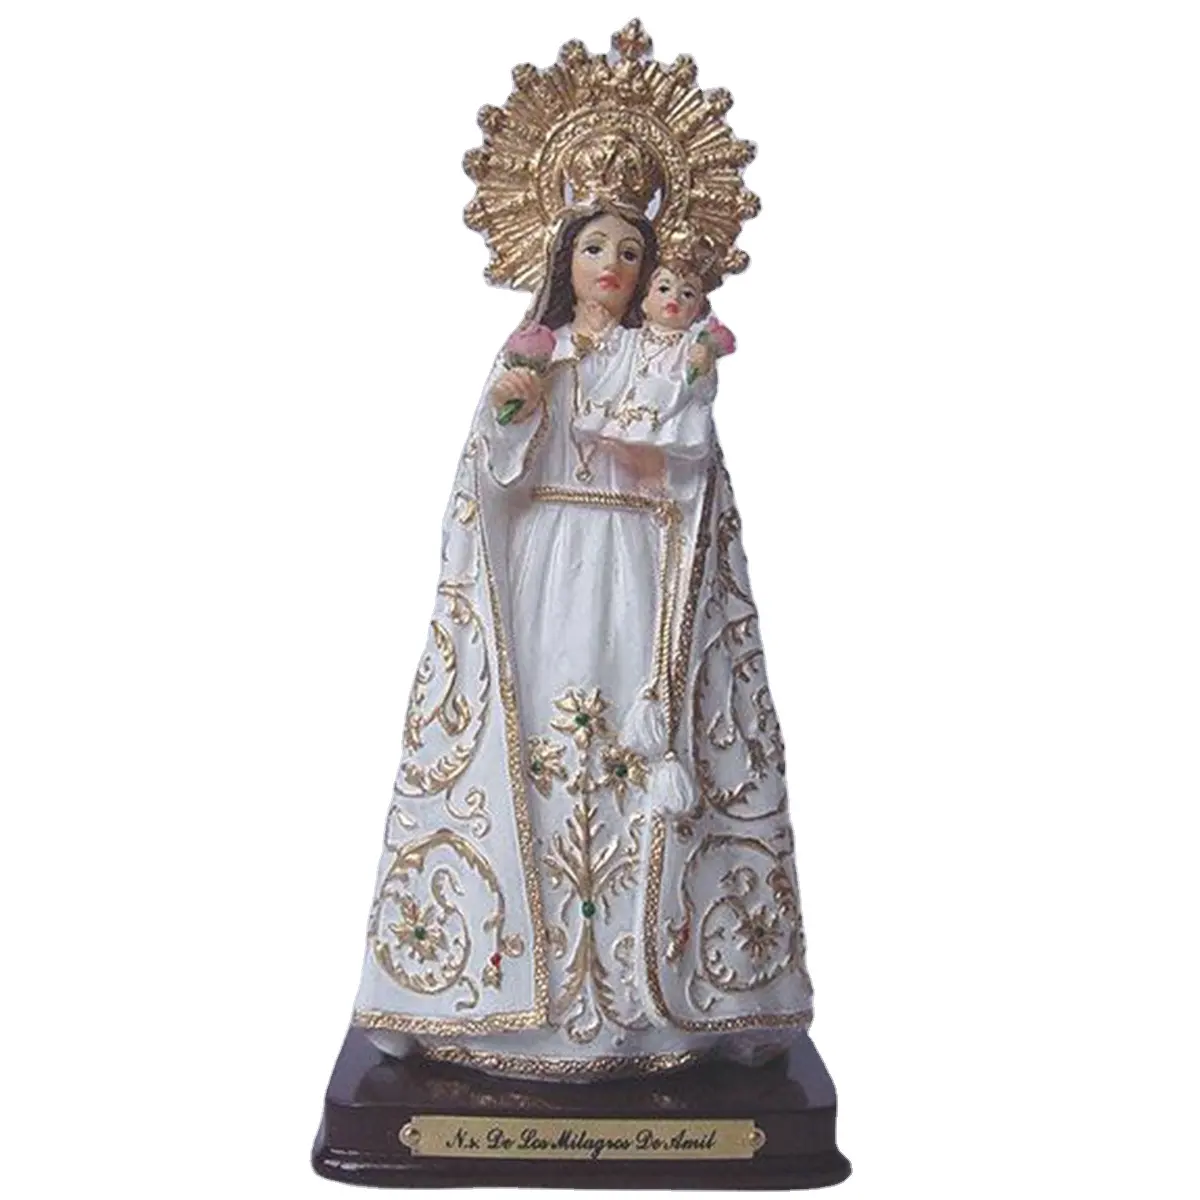 Estatua de Madonna católica religiosa de resina personalizada para decoración del hogar